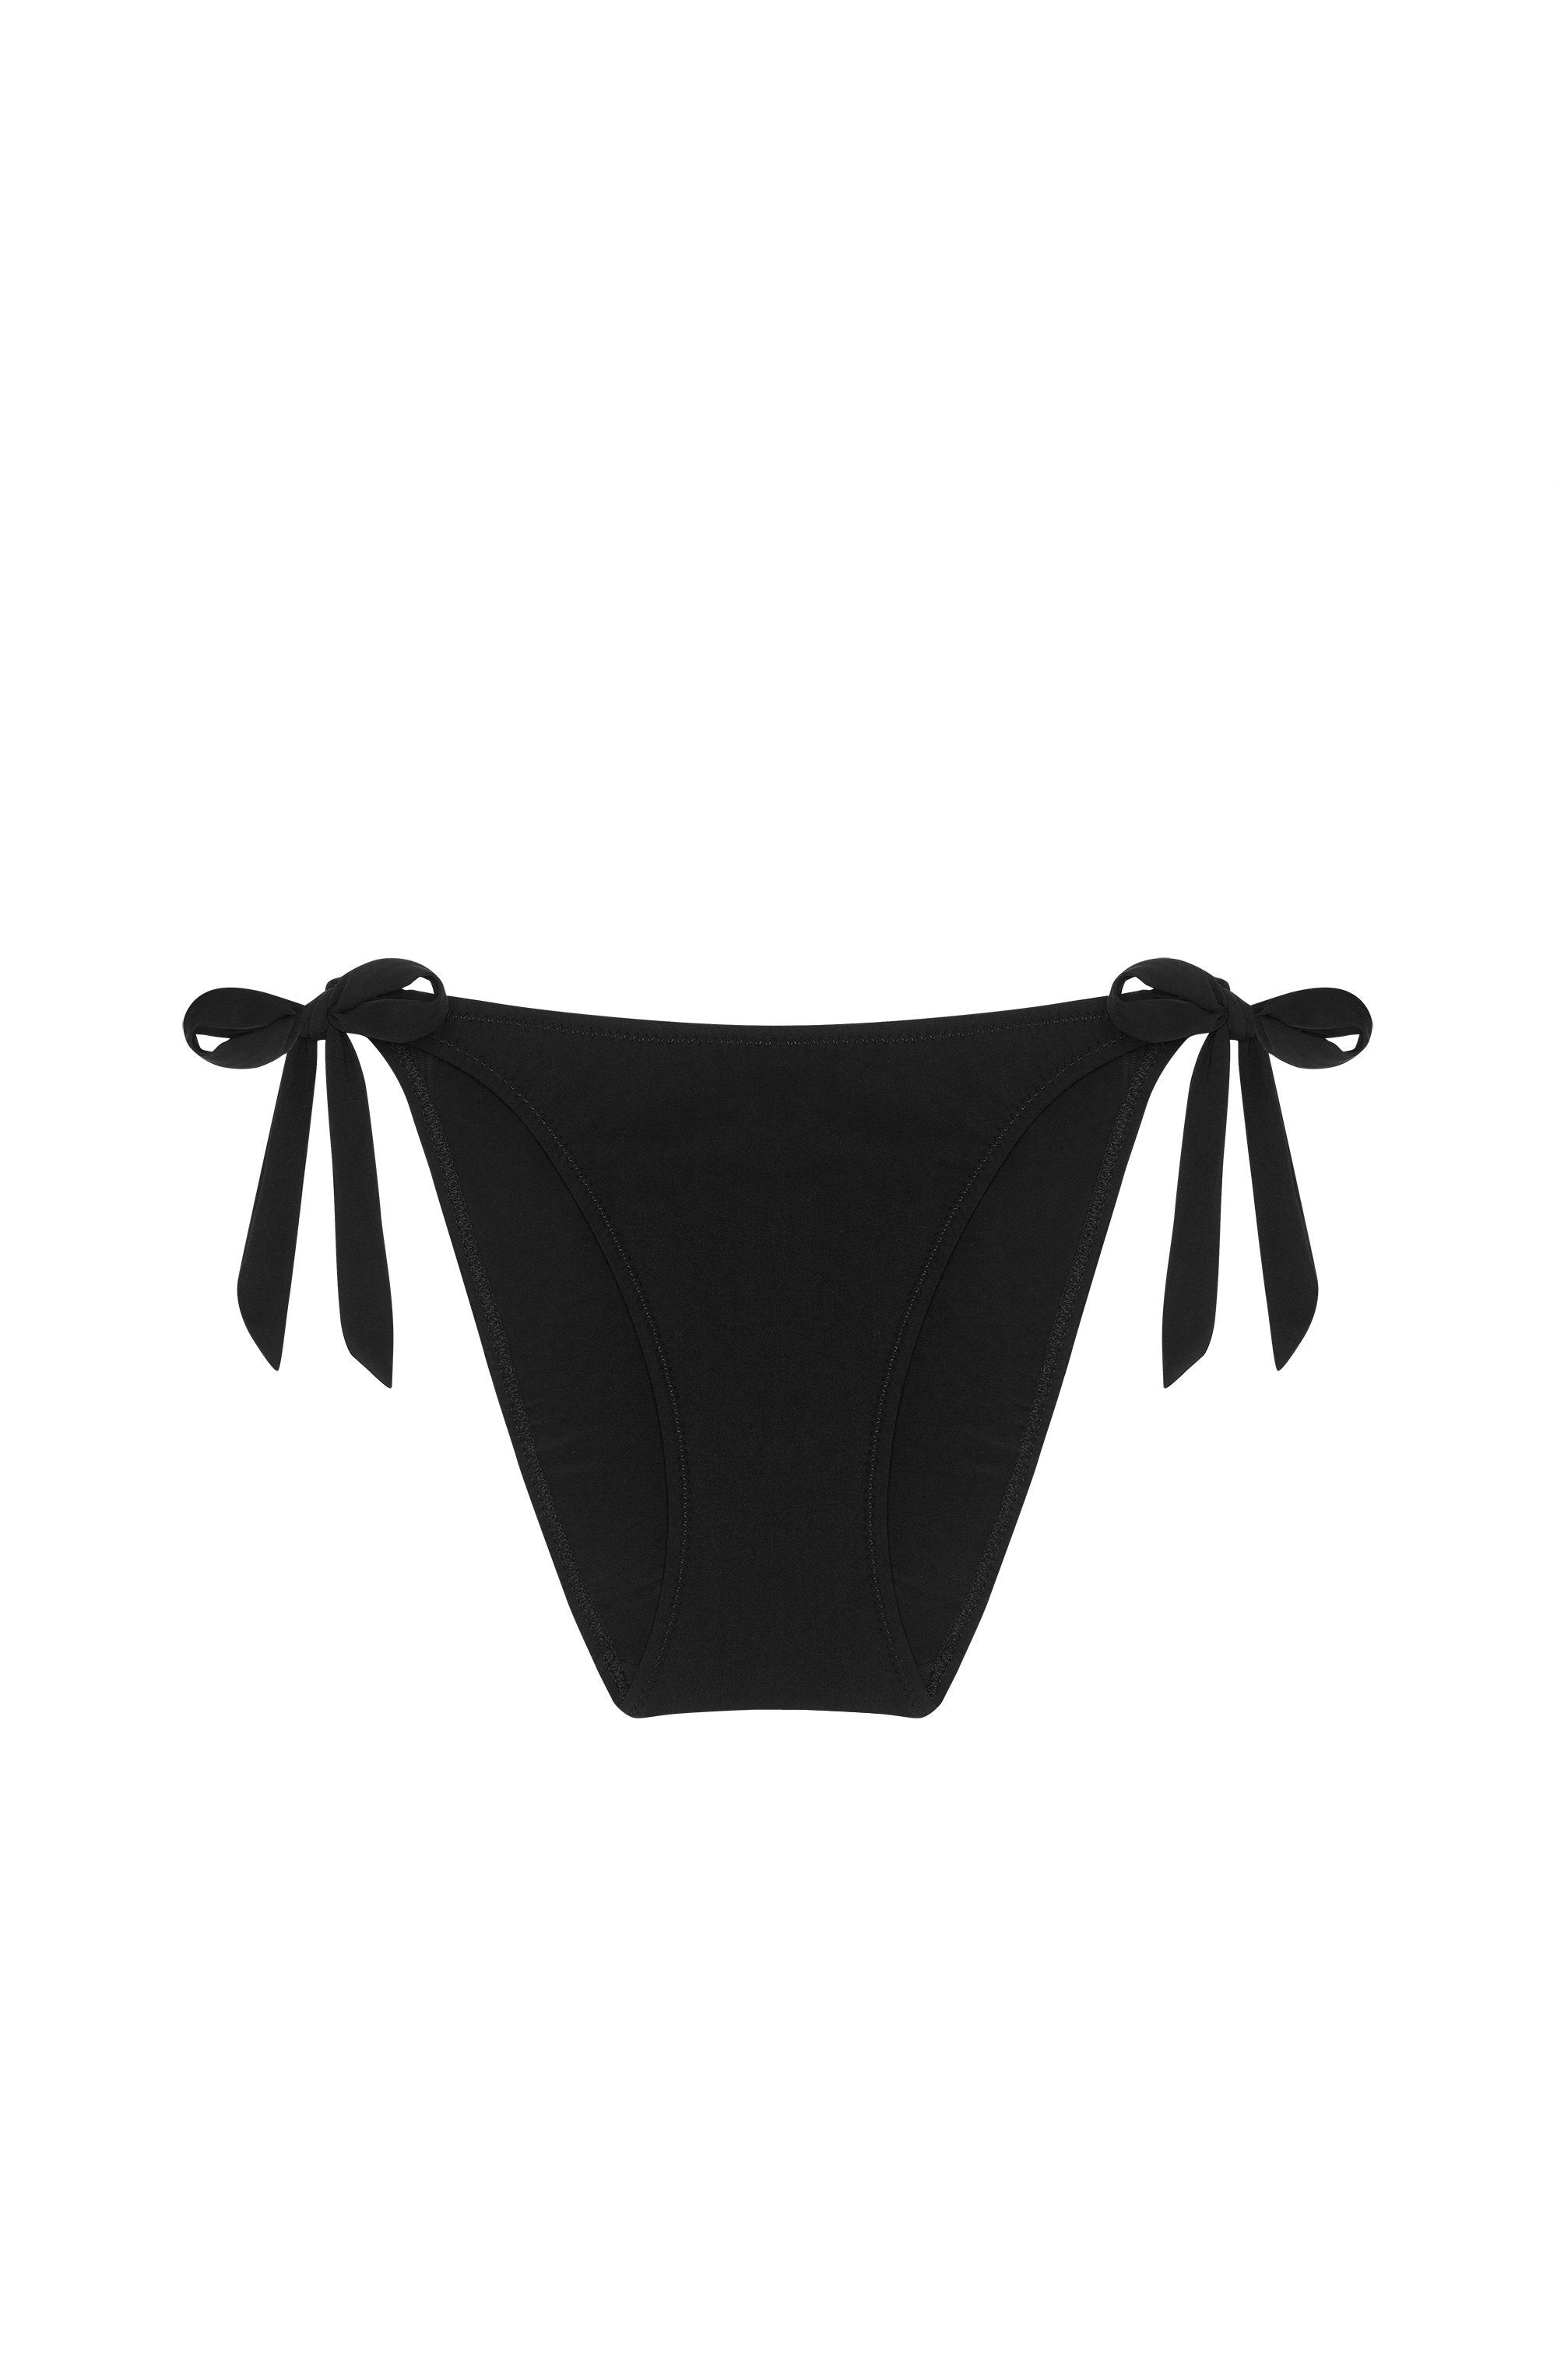 Onyx-Black bikini bottoms with ties